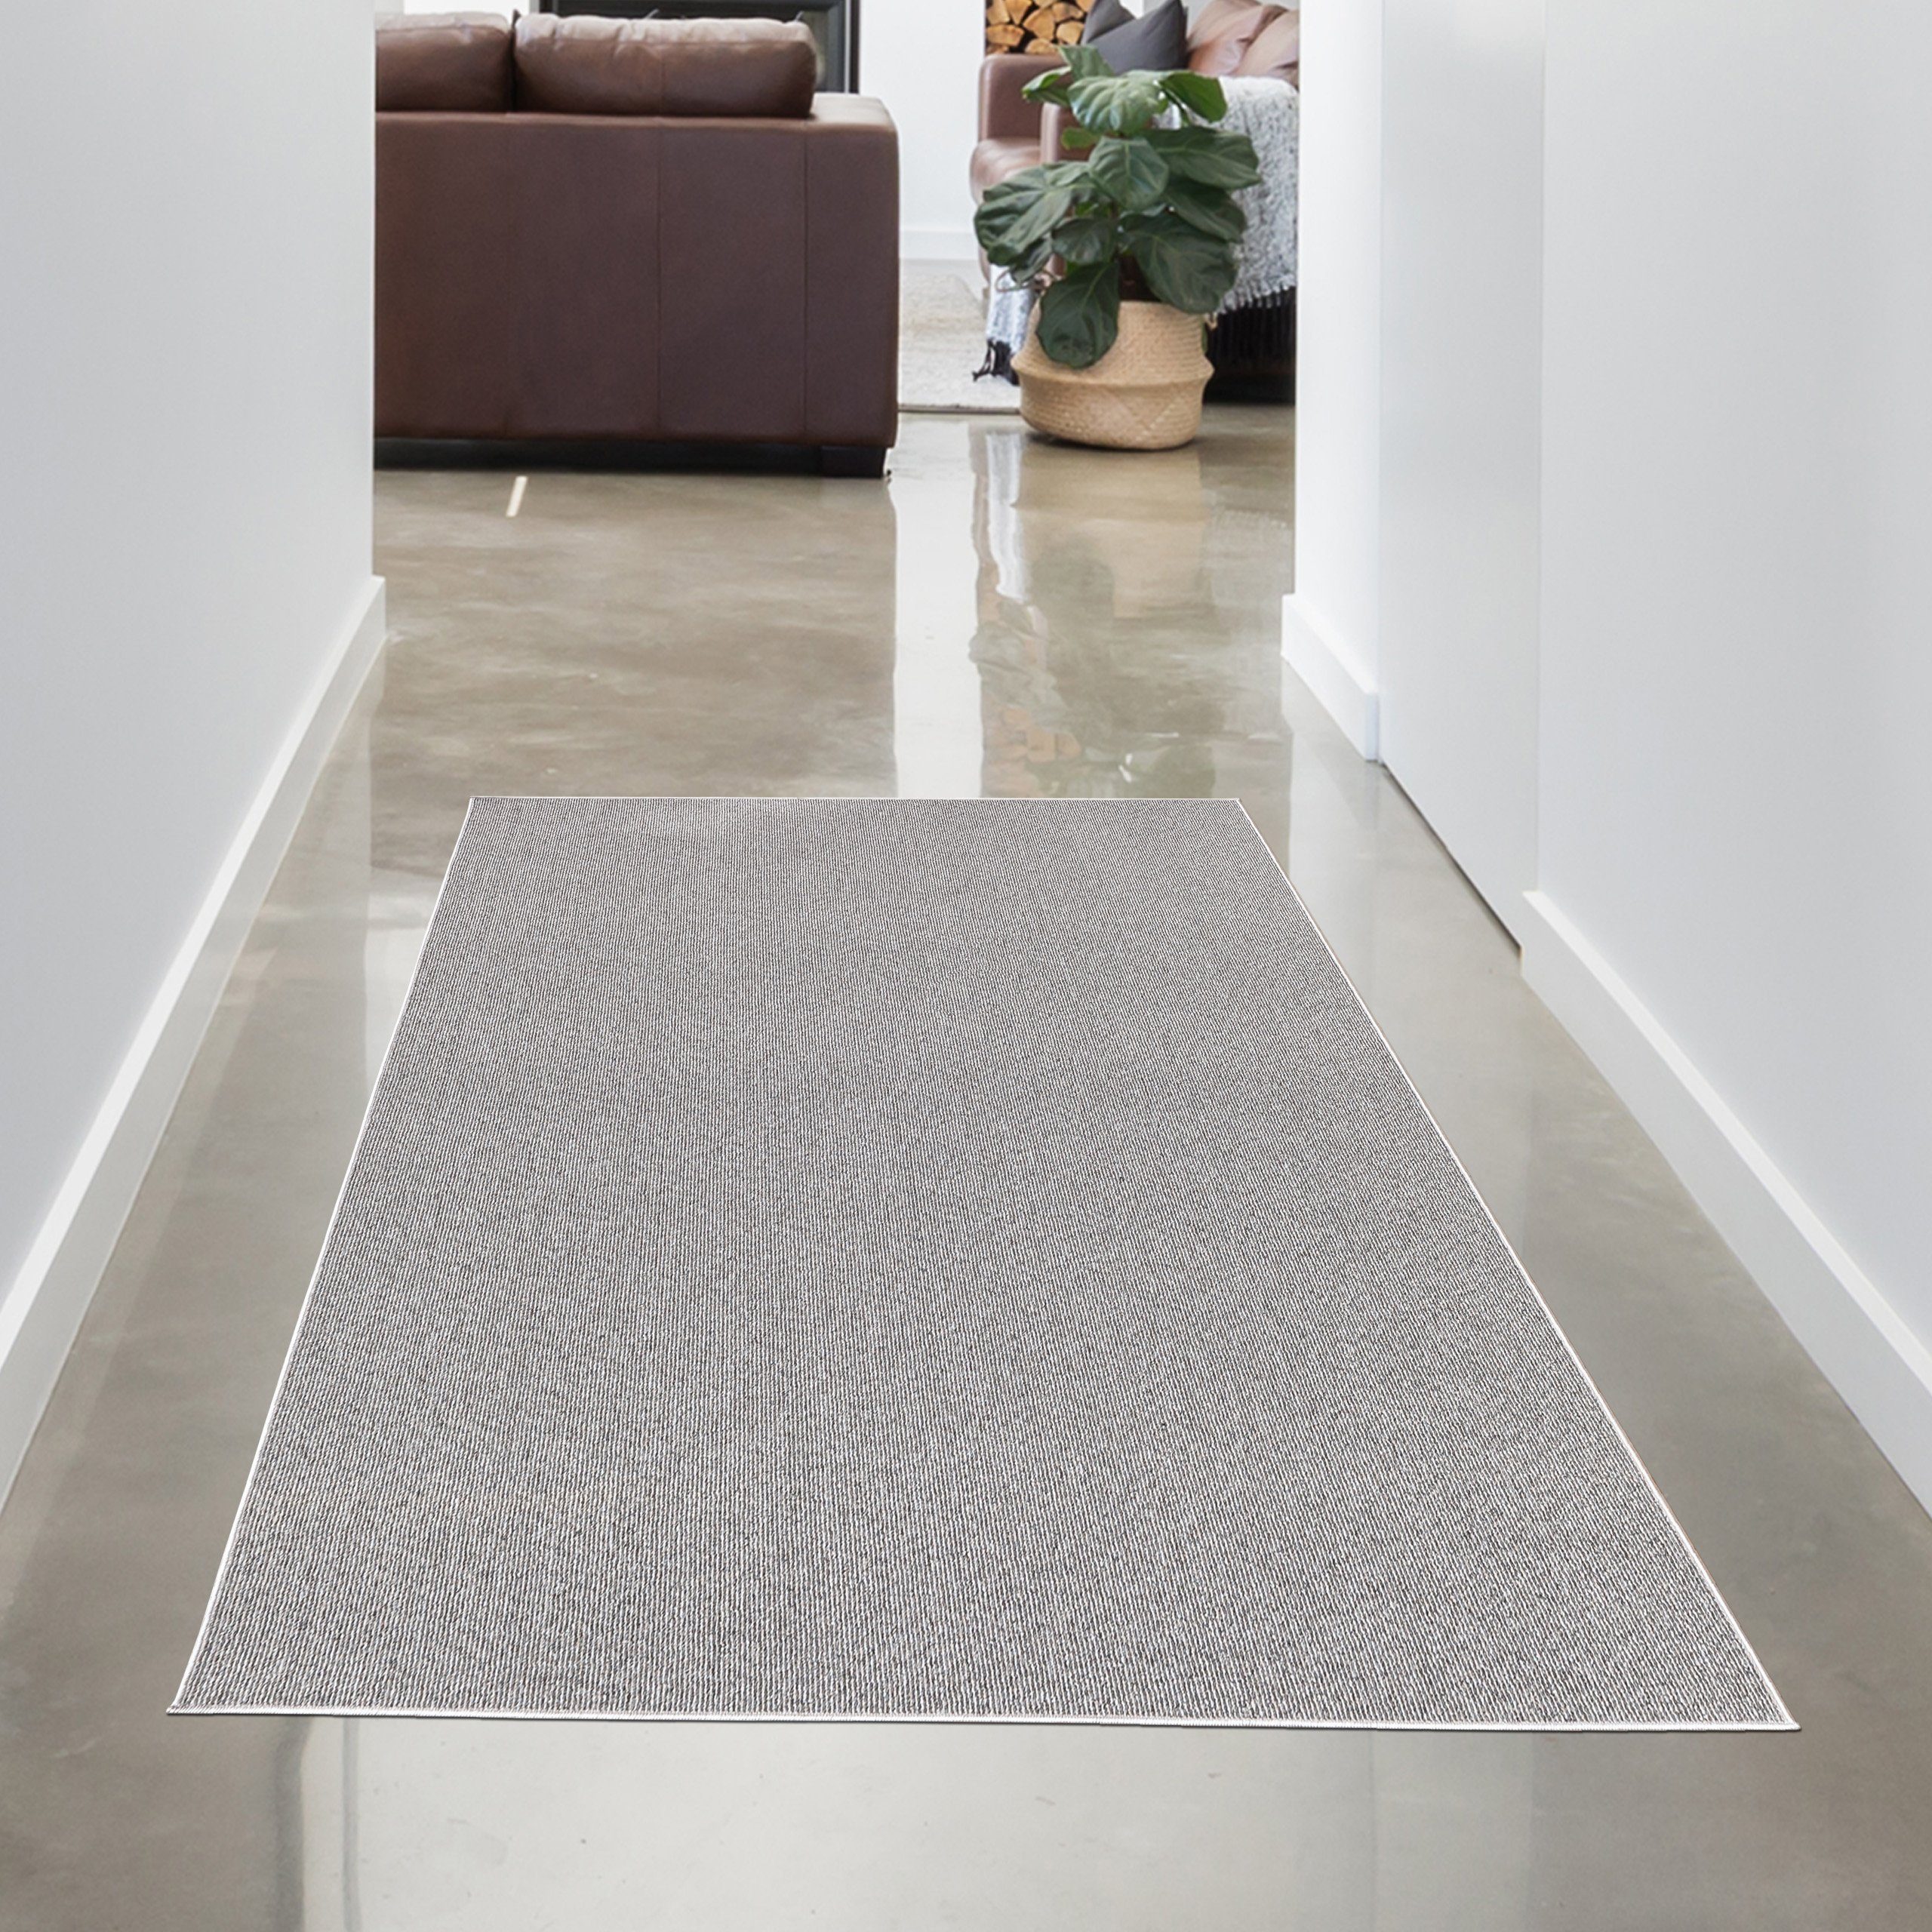 Teppich Teppich flach-gewebt für Eingang & Diele • einfarbig in grau, Carpetia, rechteckig